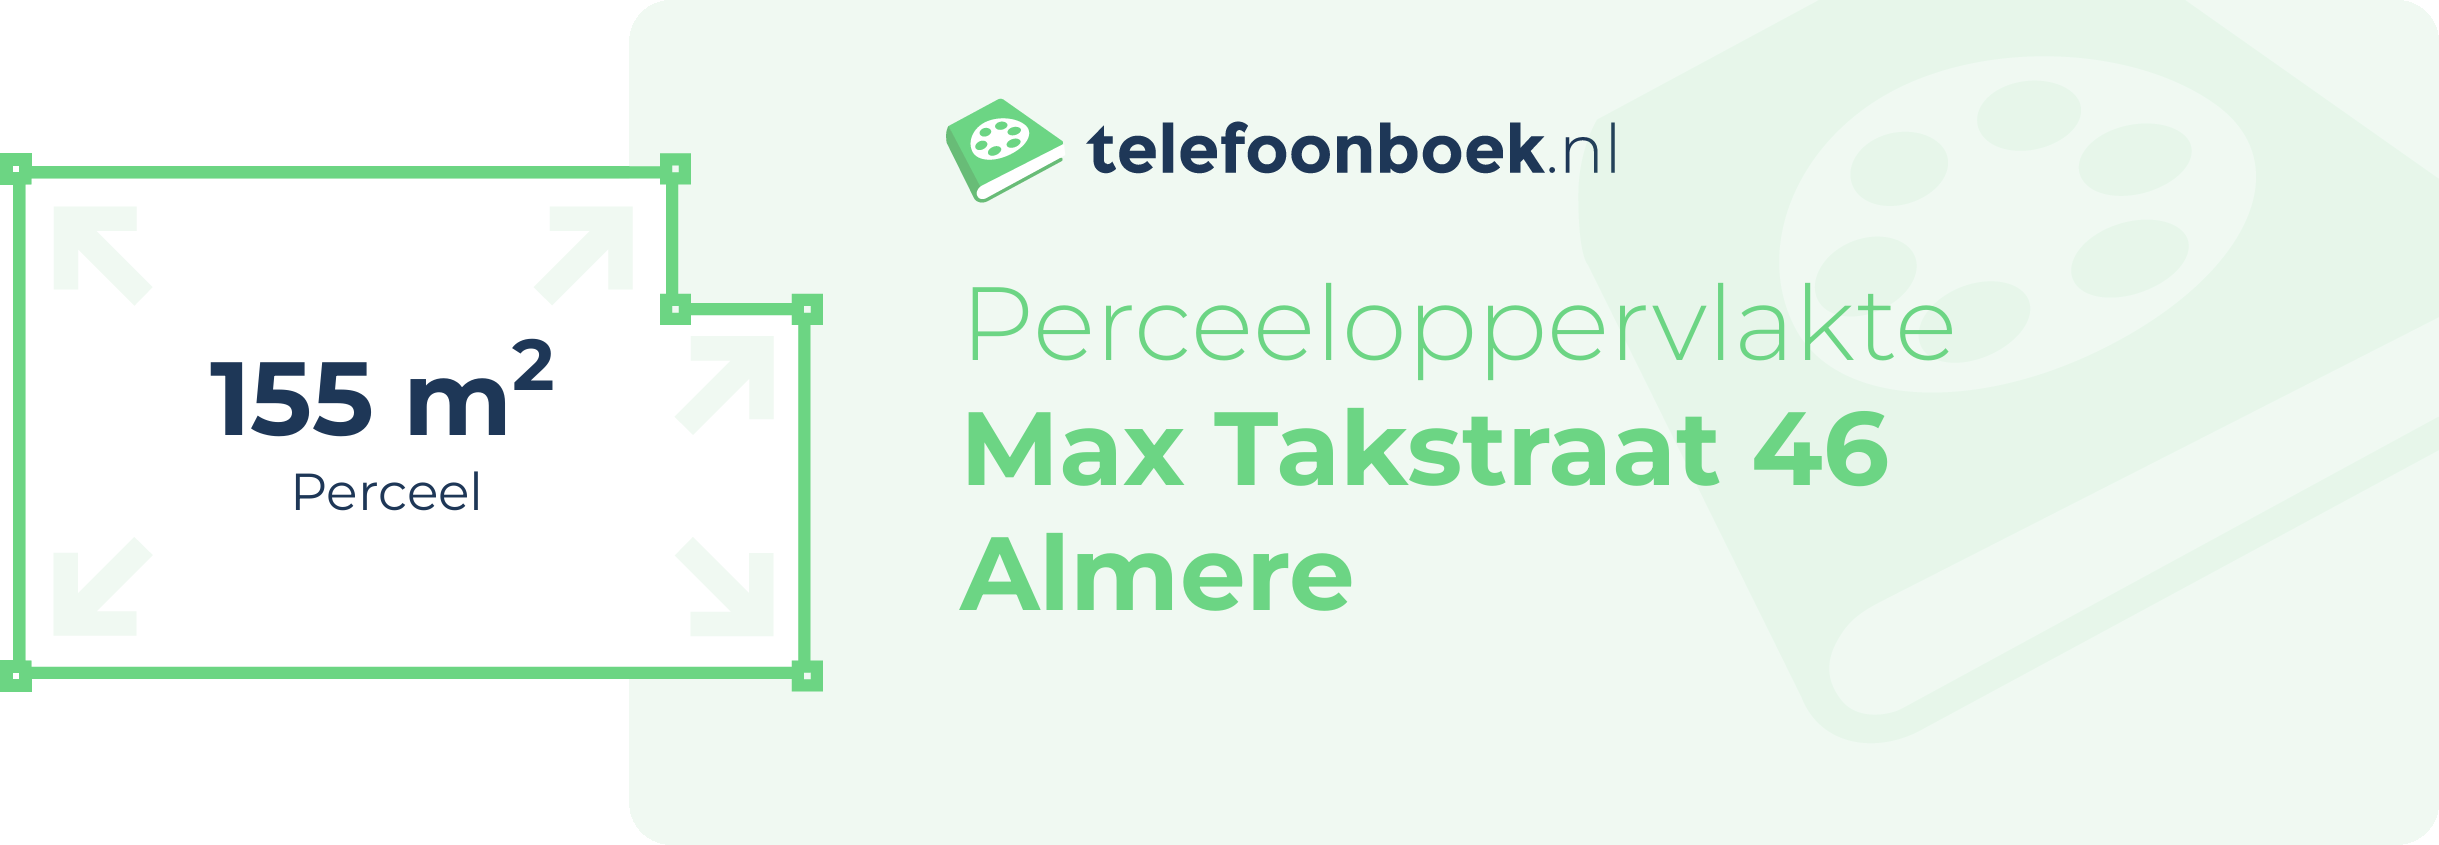 Perceeloppervlakte Max Takstraat 46 Almere